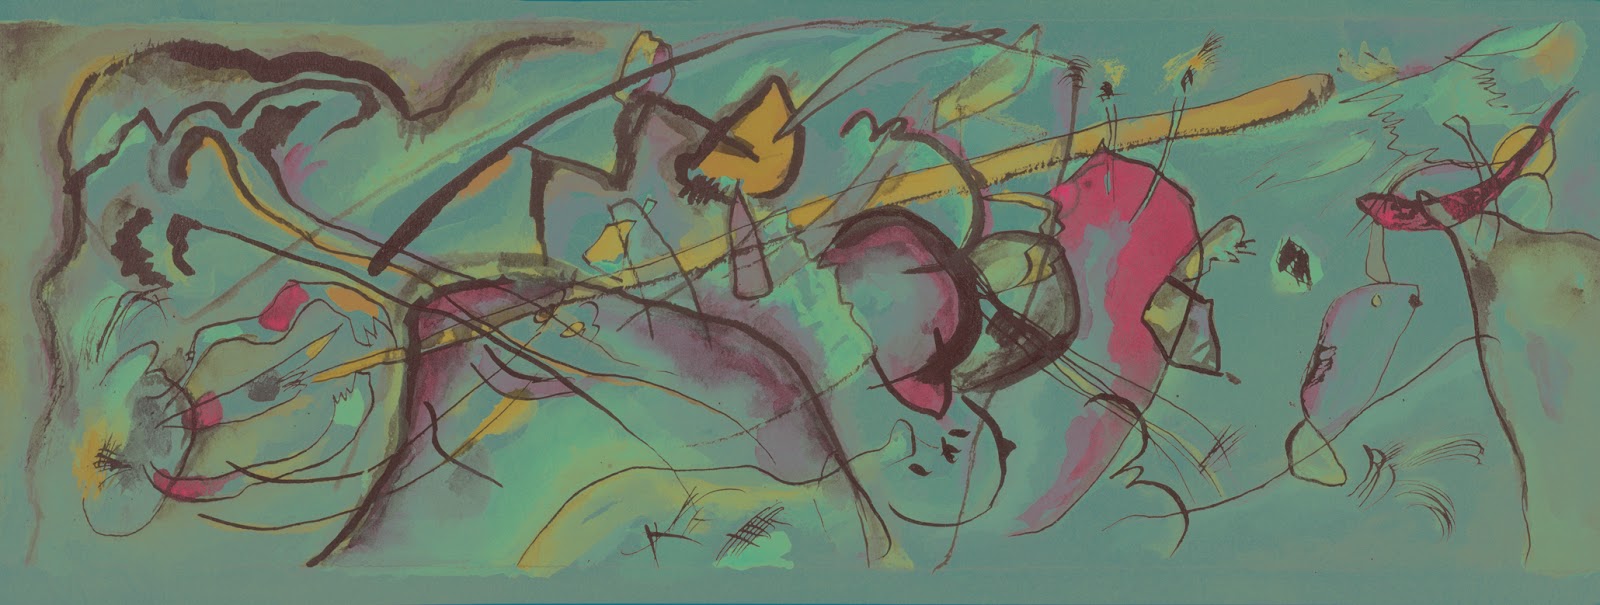 Wassily+Kandinsky-1866-1944 (366).jpg